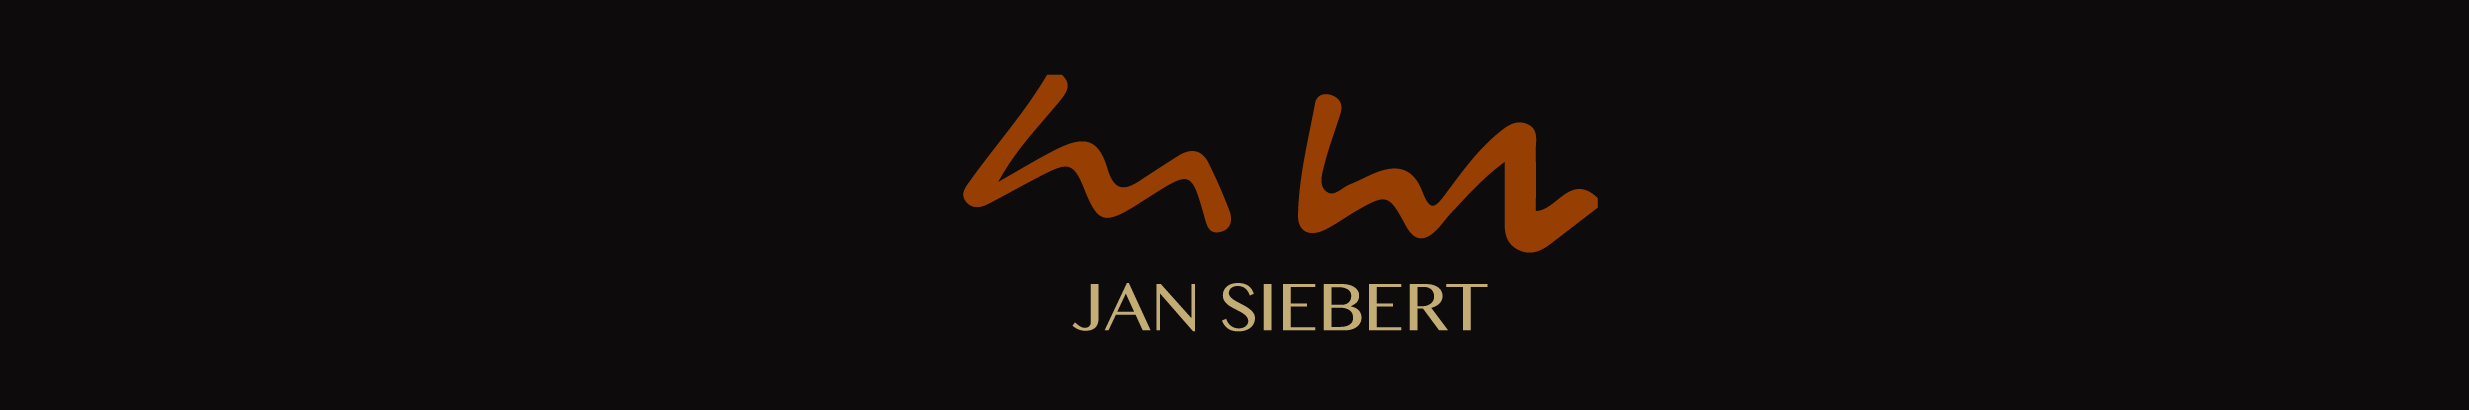 Jan Siebert's profile banner